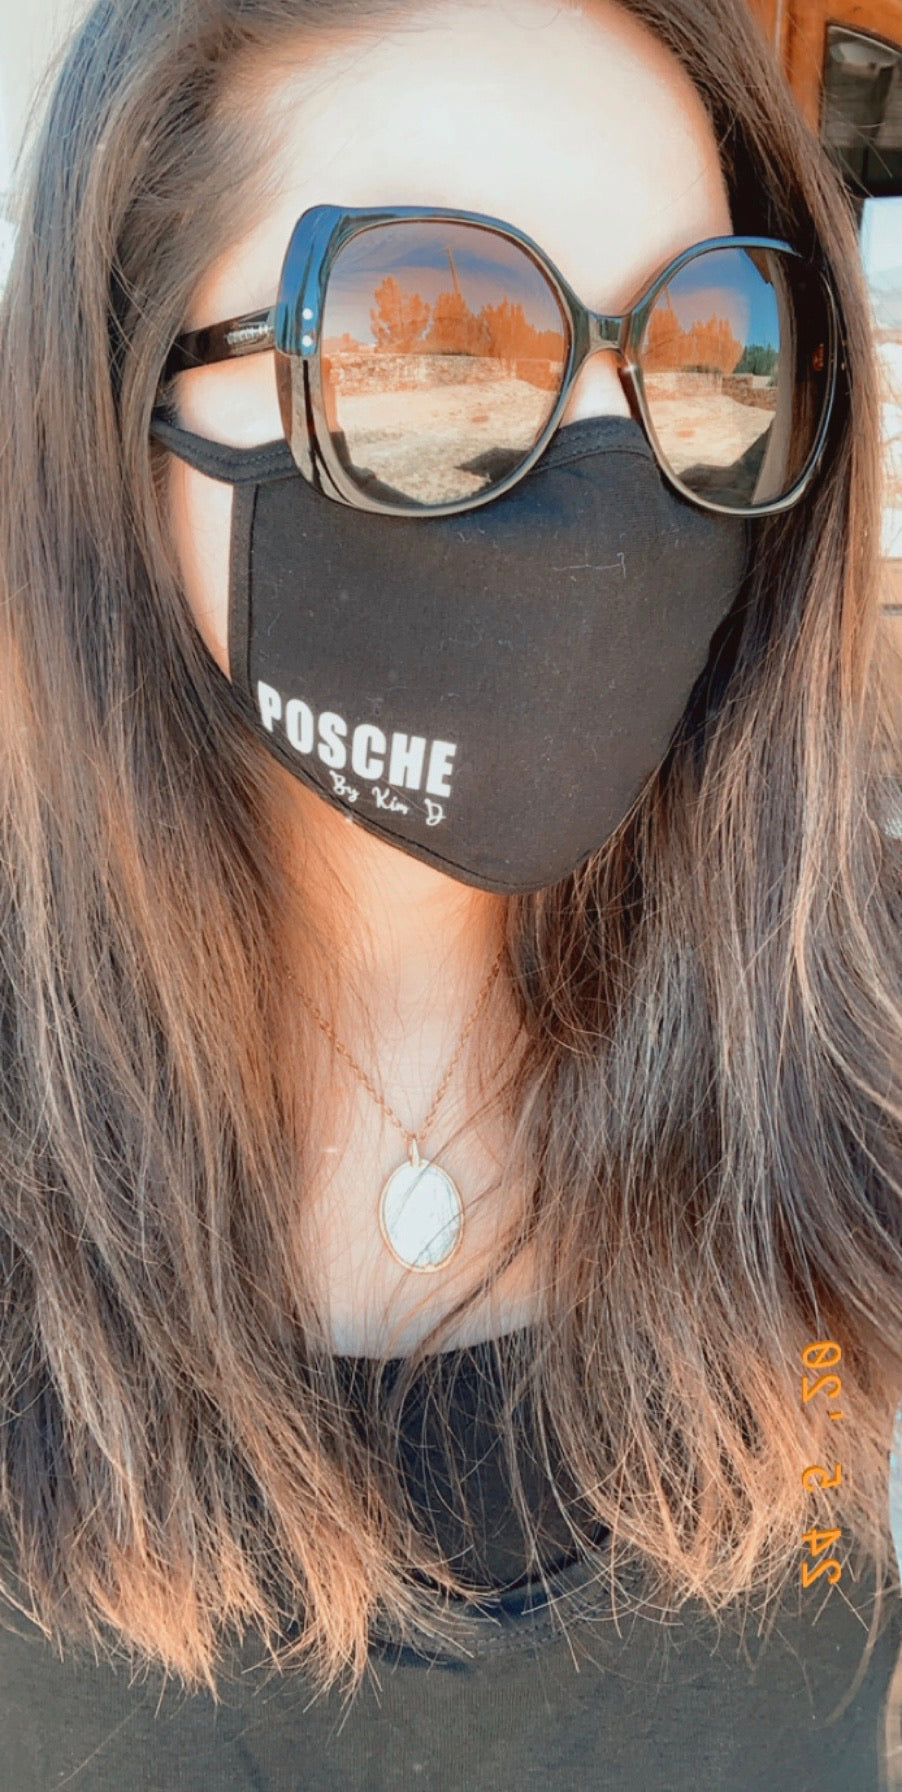 Posche By Kim D Face Mask